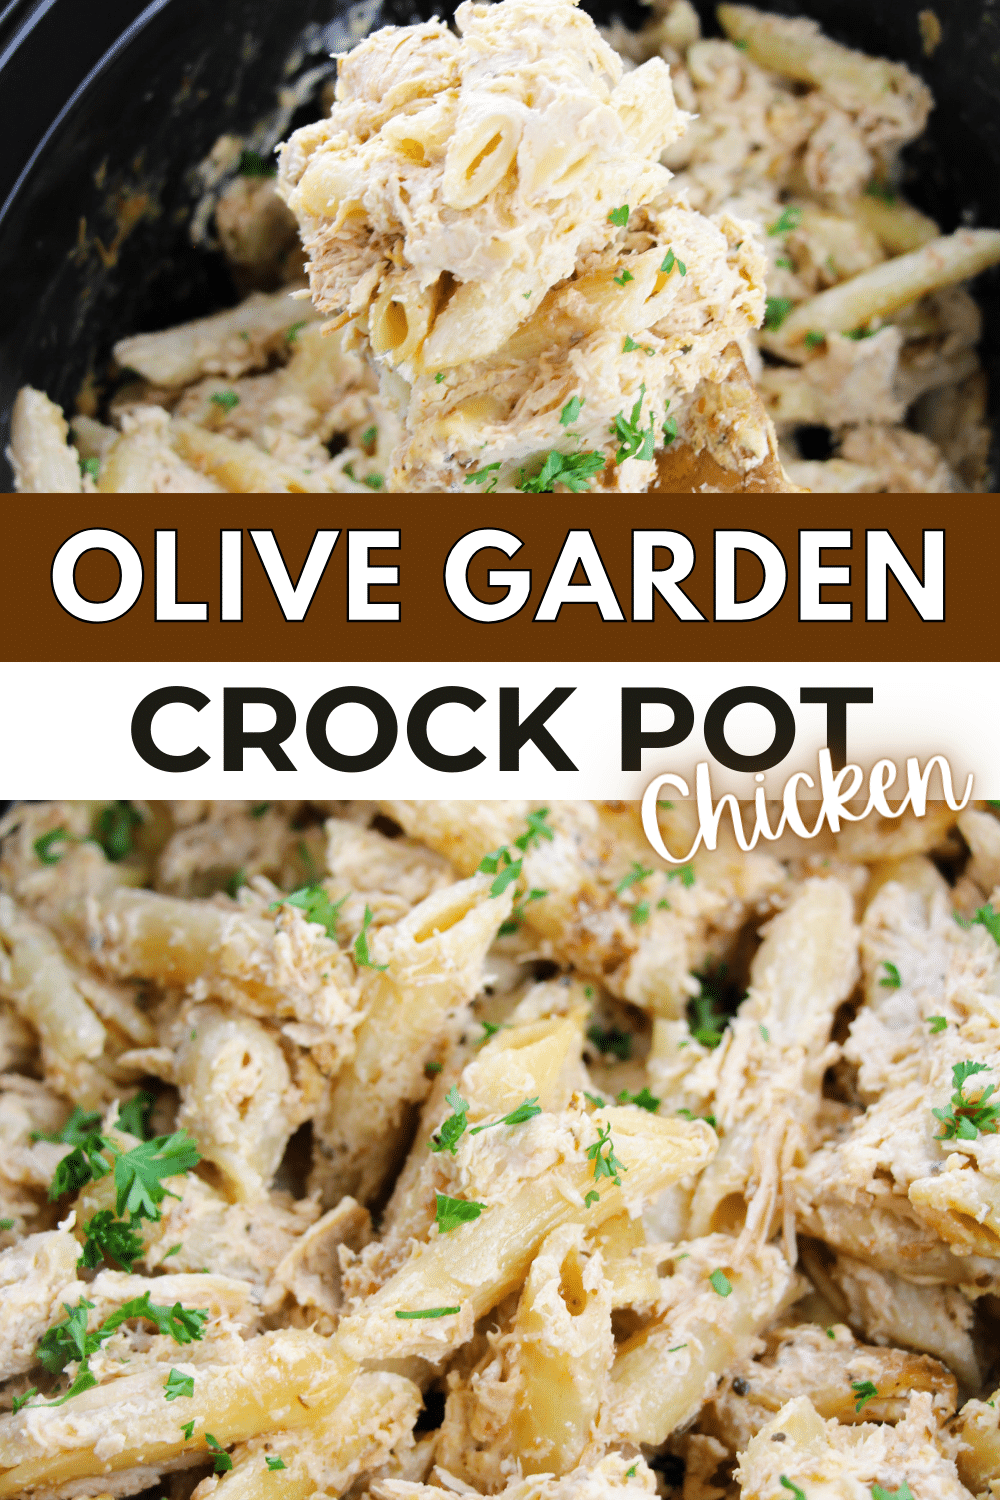 Olive Garden's famous crock pot chicken recipe.